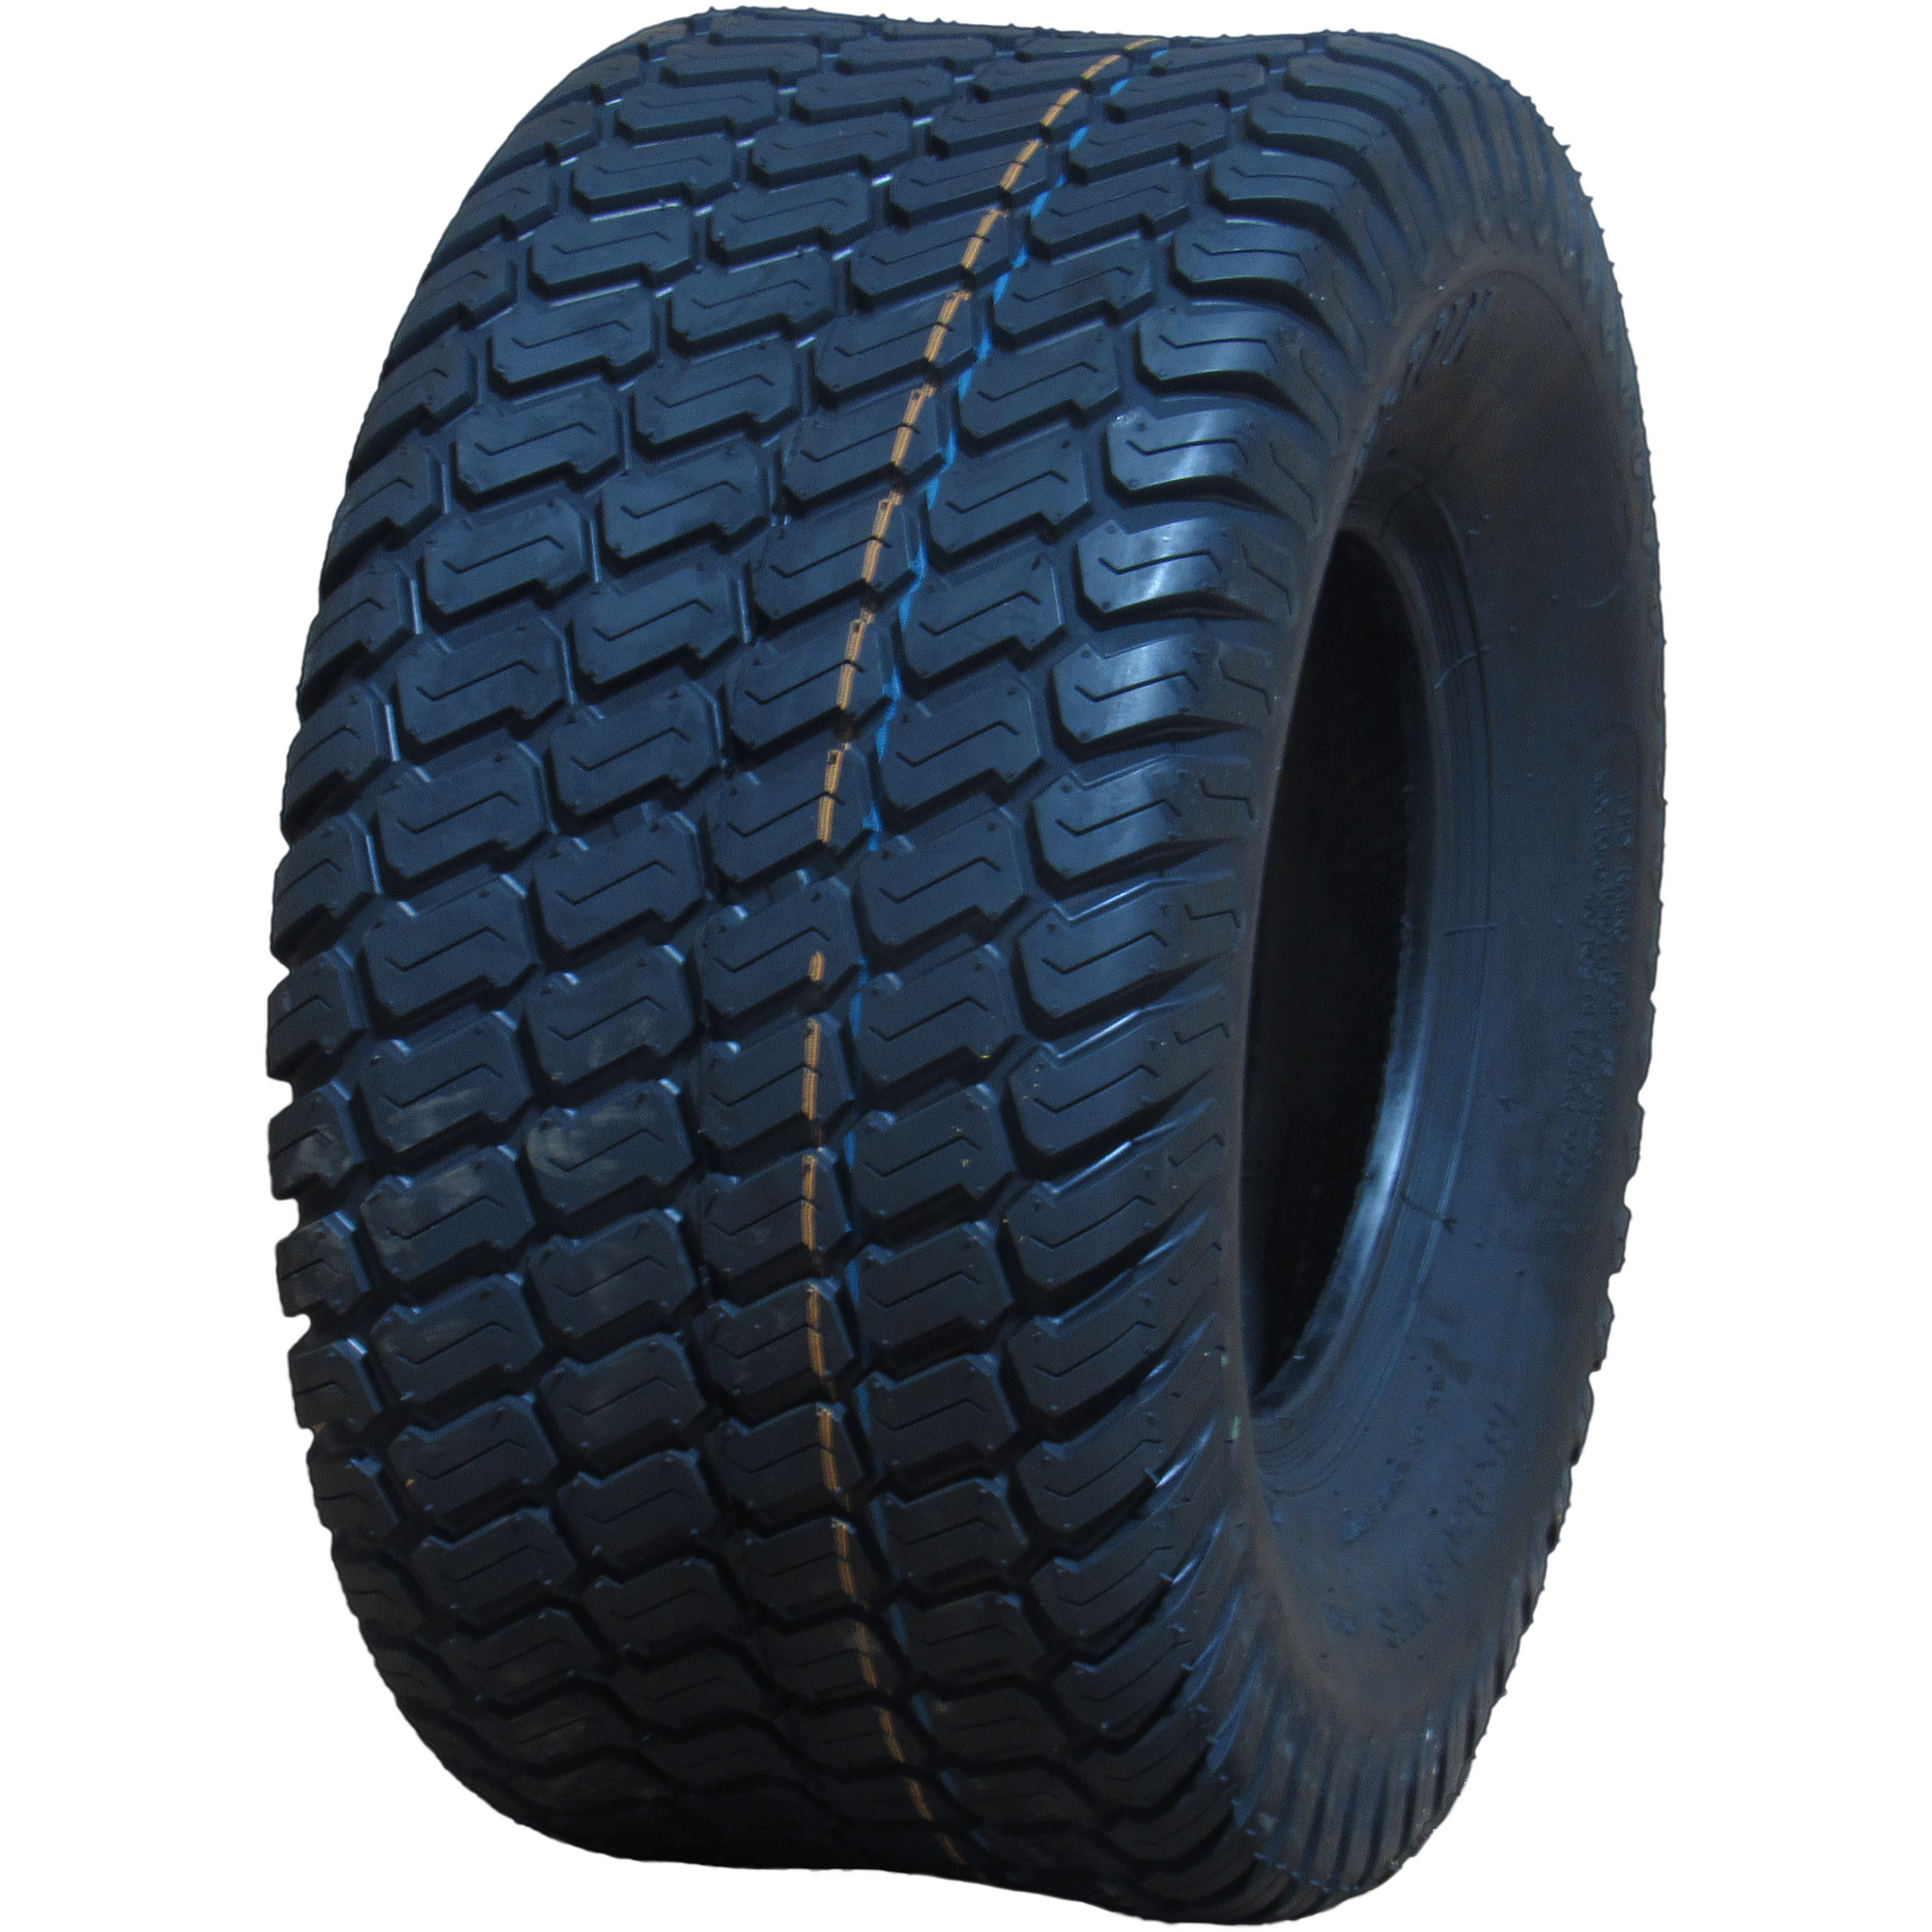 HI-RUN, Lawn Garden Tire, SU05 Turf, Tire Size 18X9.50-8 Load Range Rating B, Model WD1134